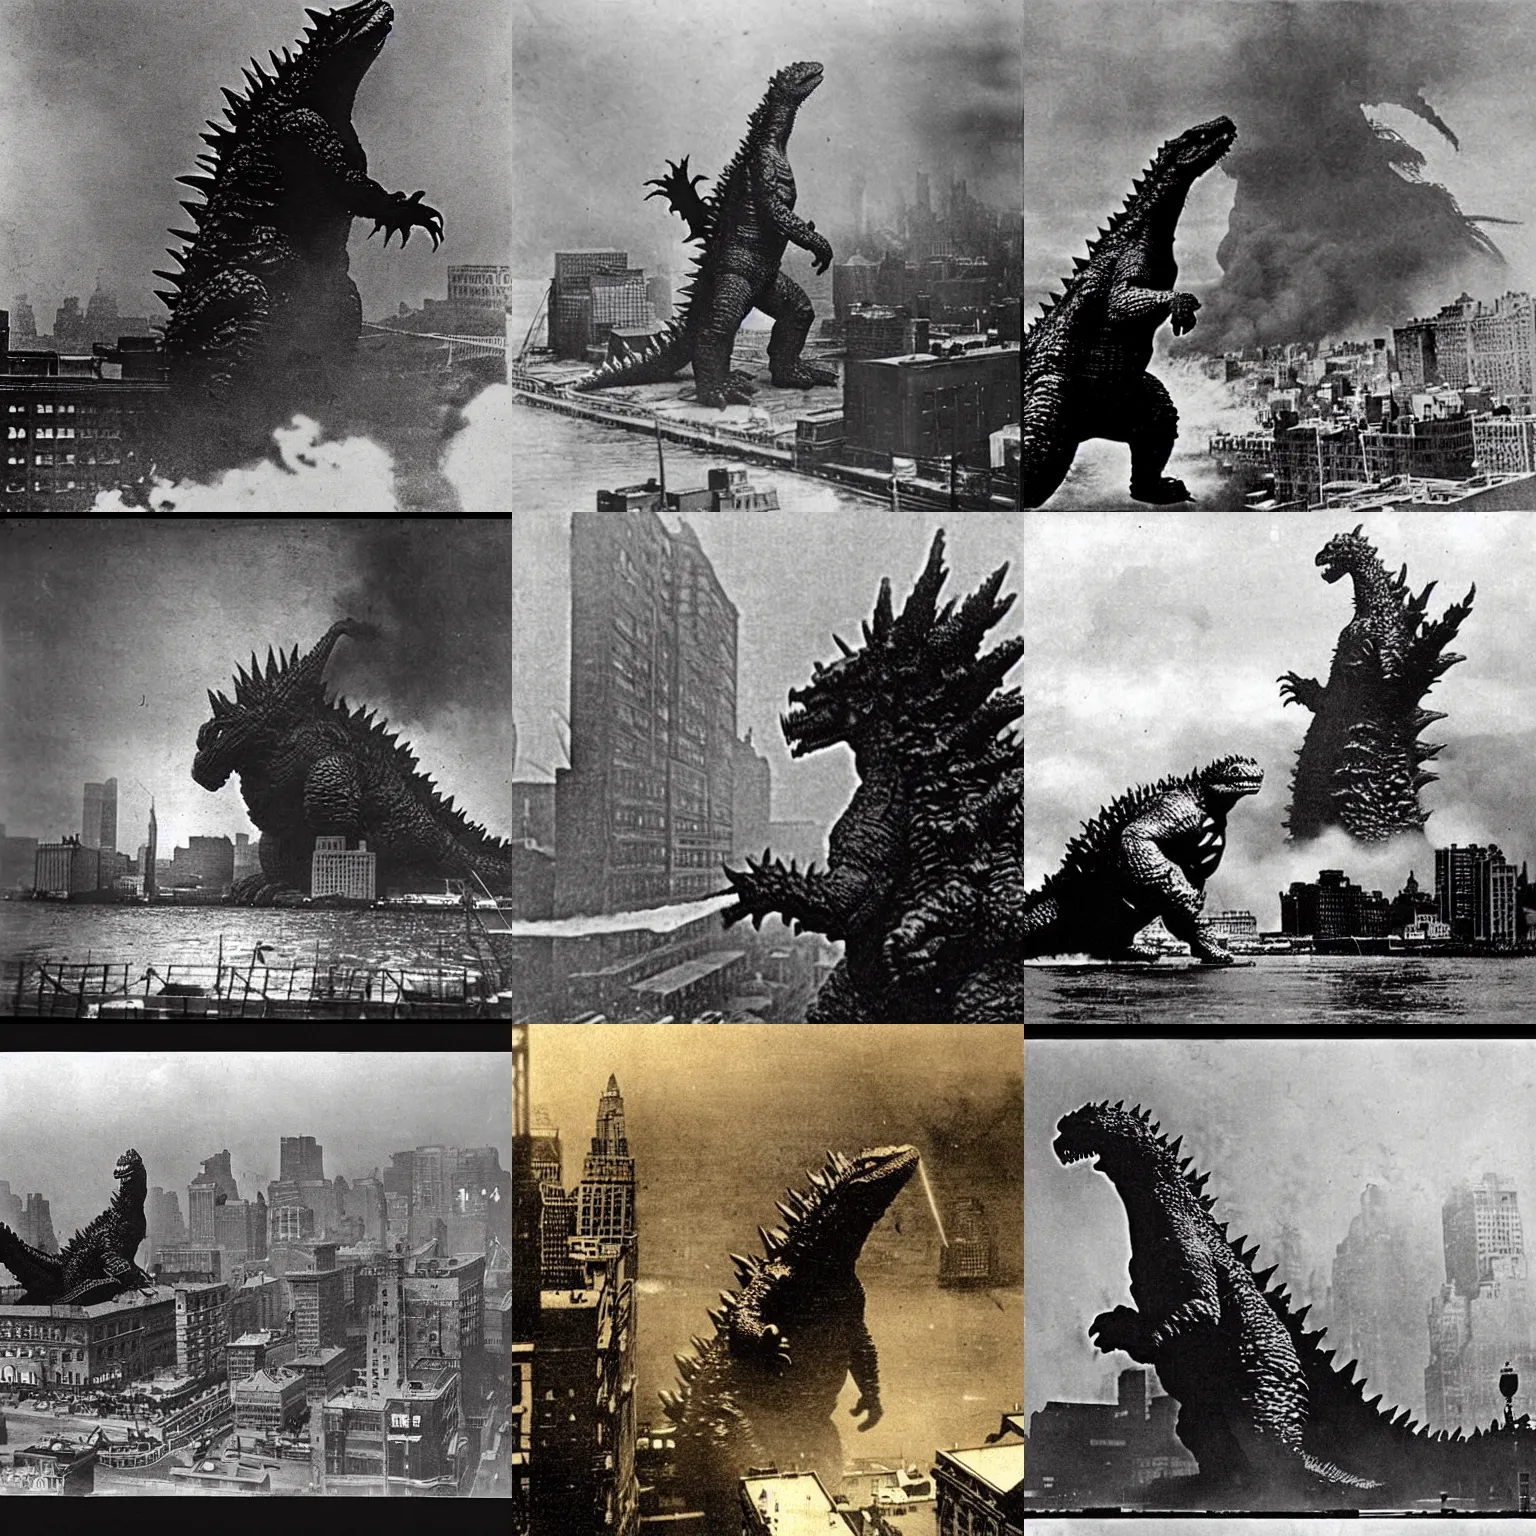 Prompt: “Godzilla attacking New York, 1900’s photo”